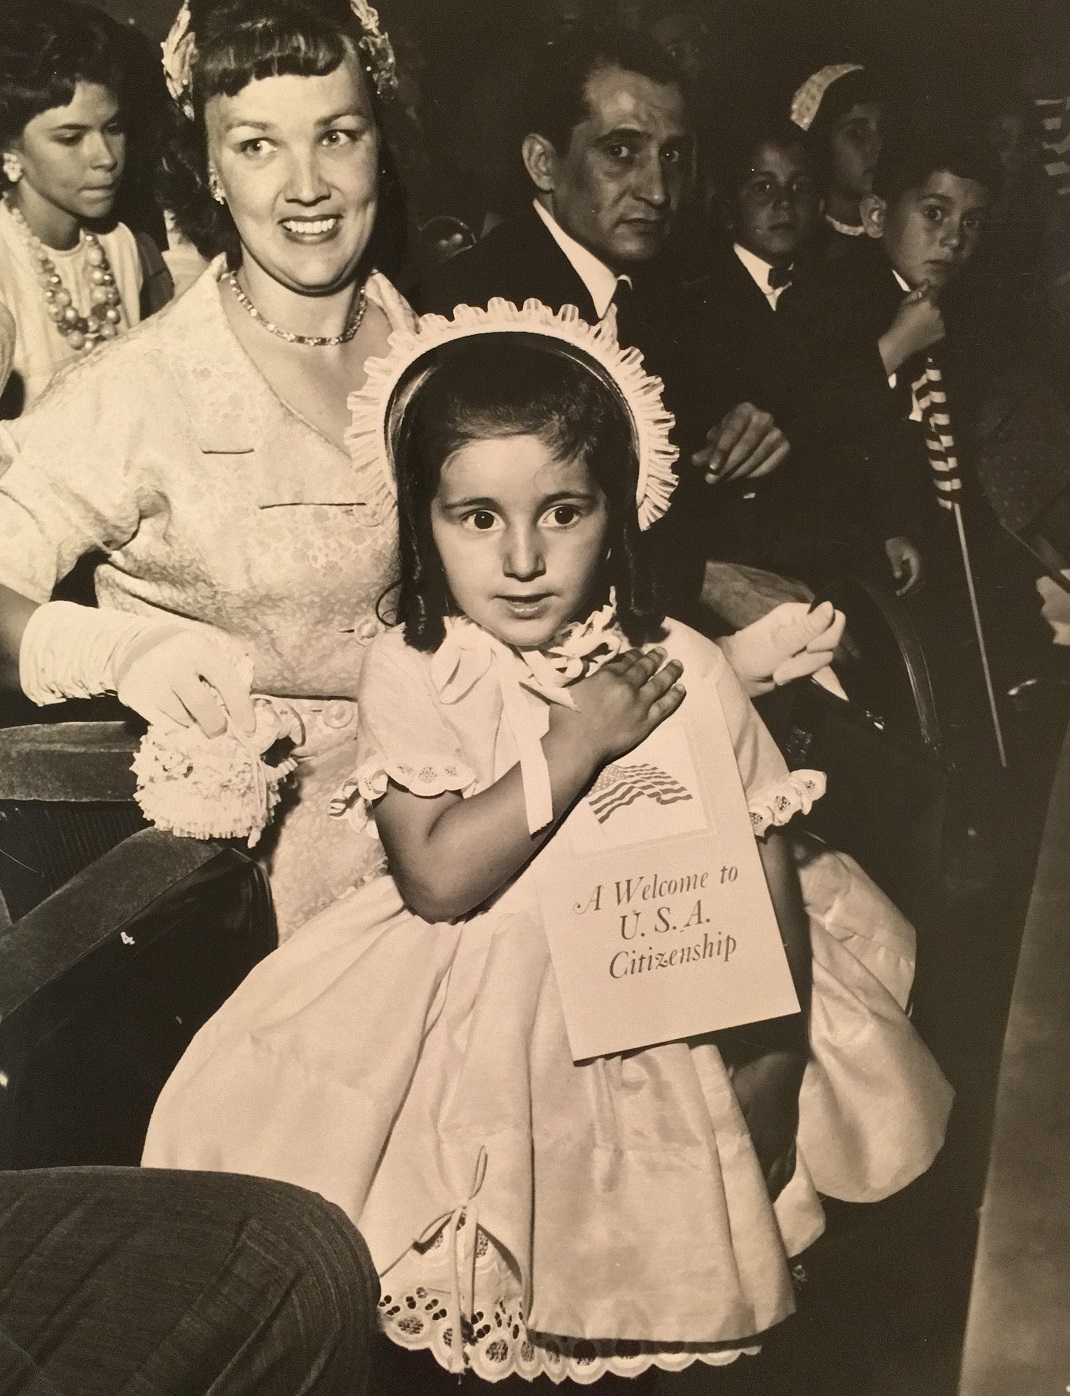 To 1961, σε ηλικία 3 ετών, η Λίντα – Κάρολ πήρε και επίσημα την αμερικανική υπηκόοτητα